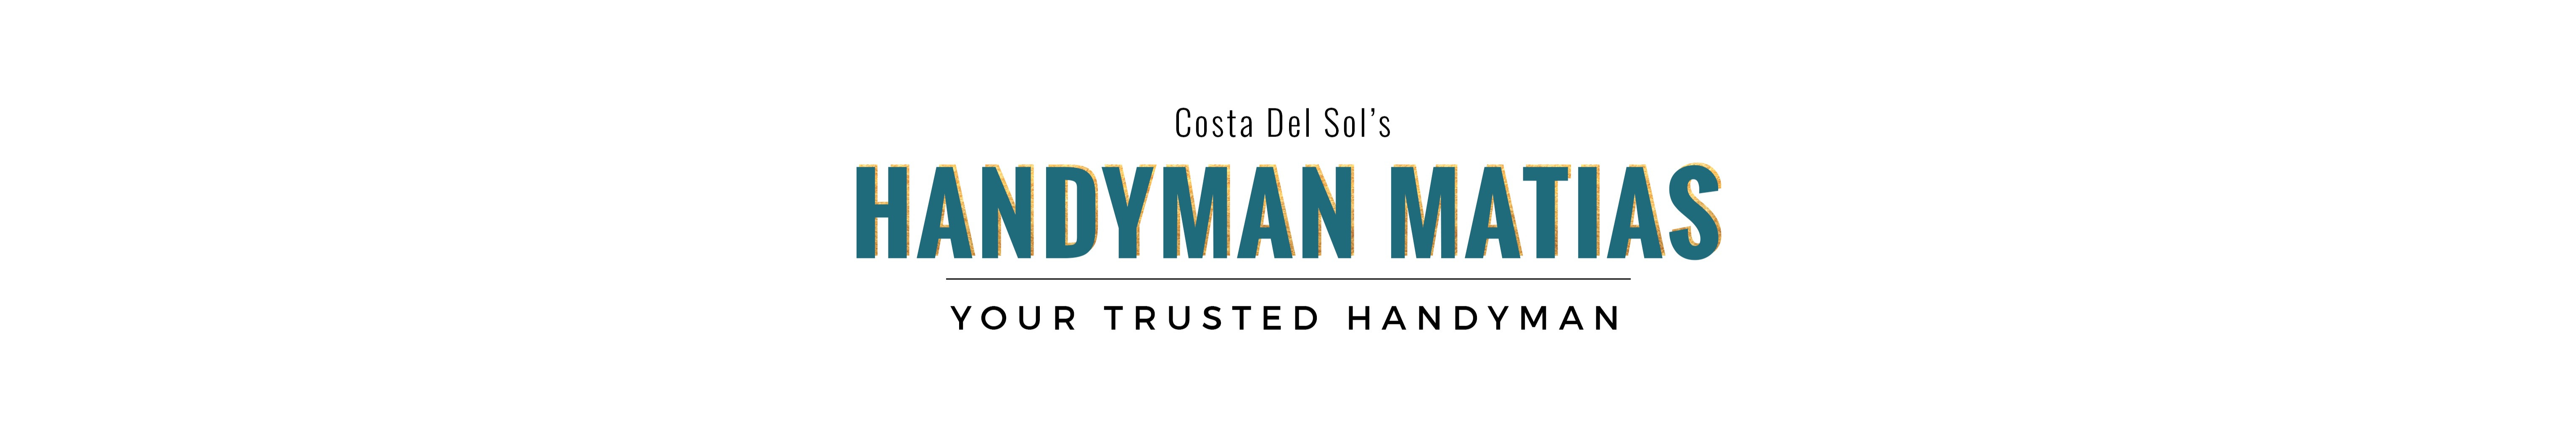 Matias - Your Trusted Handyman